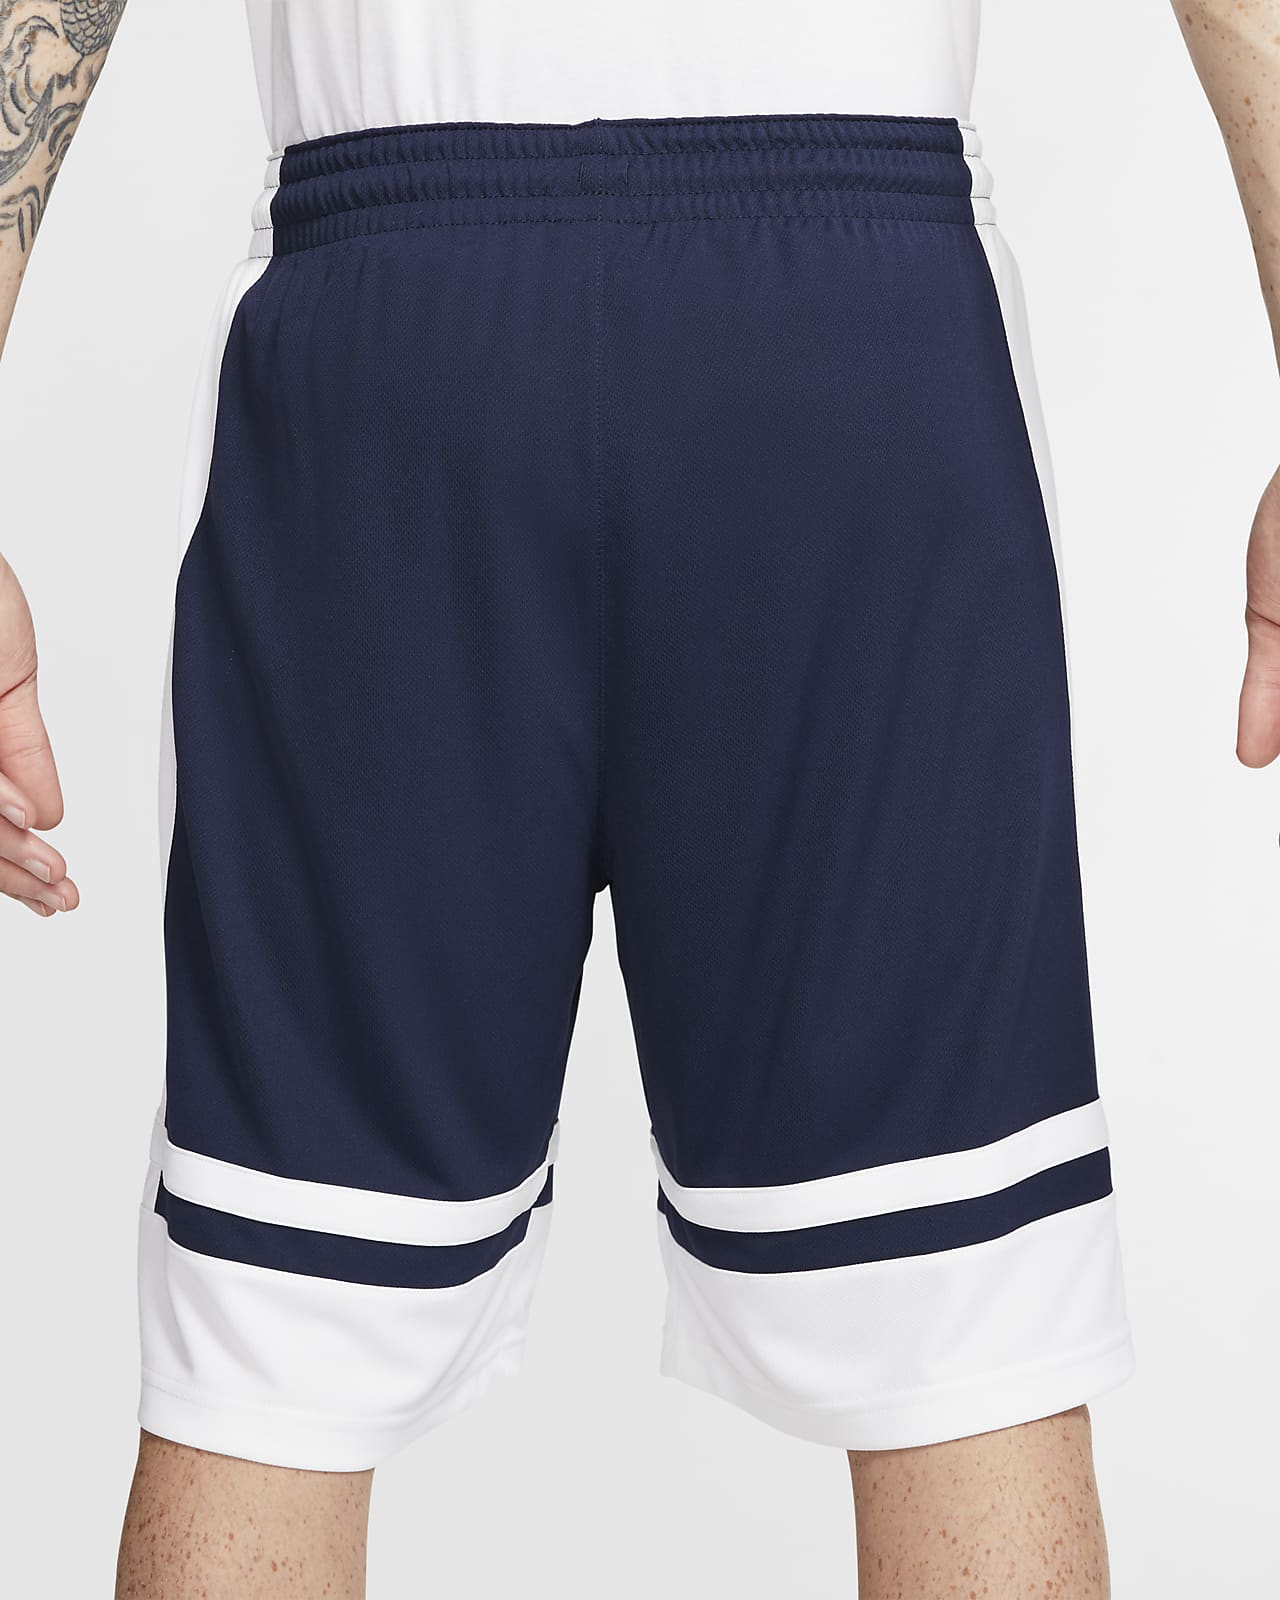 navy blue nike elite shorts